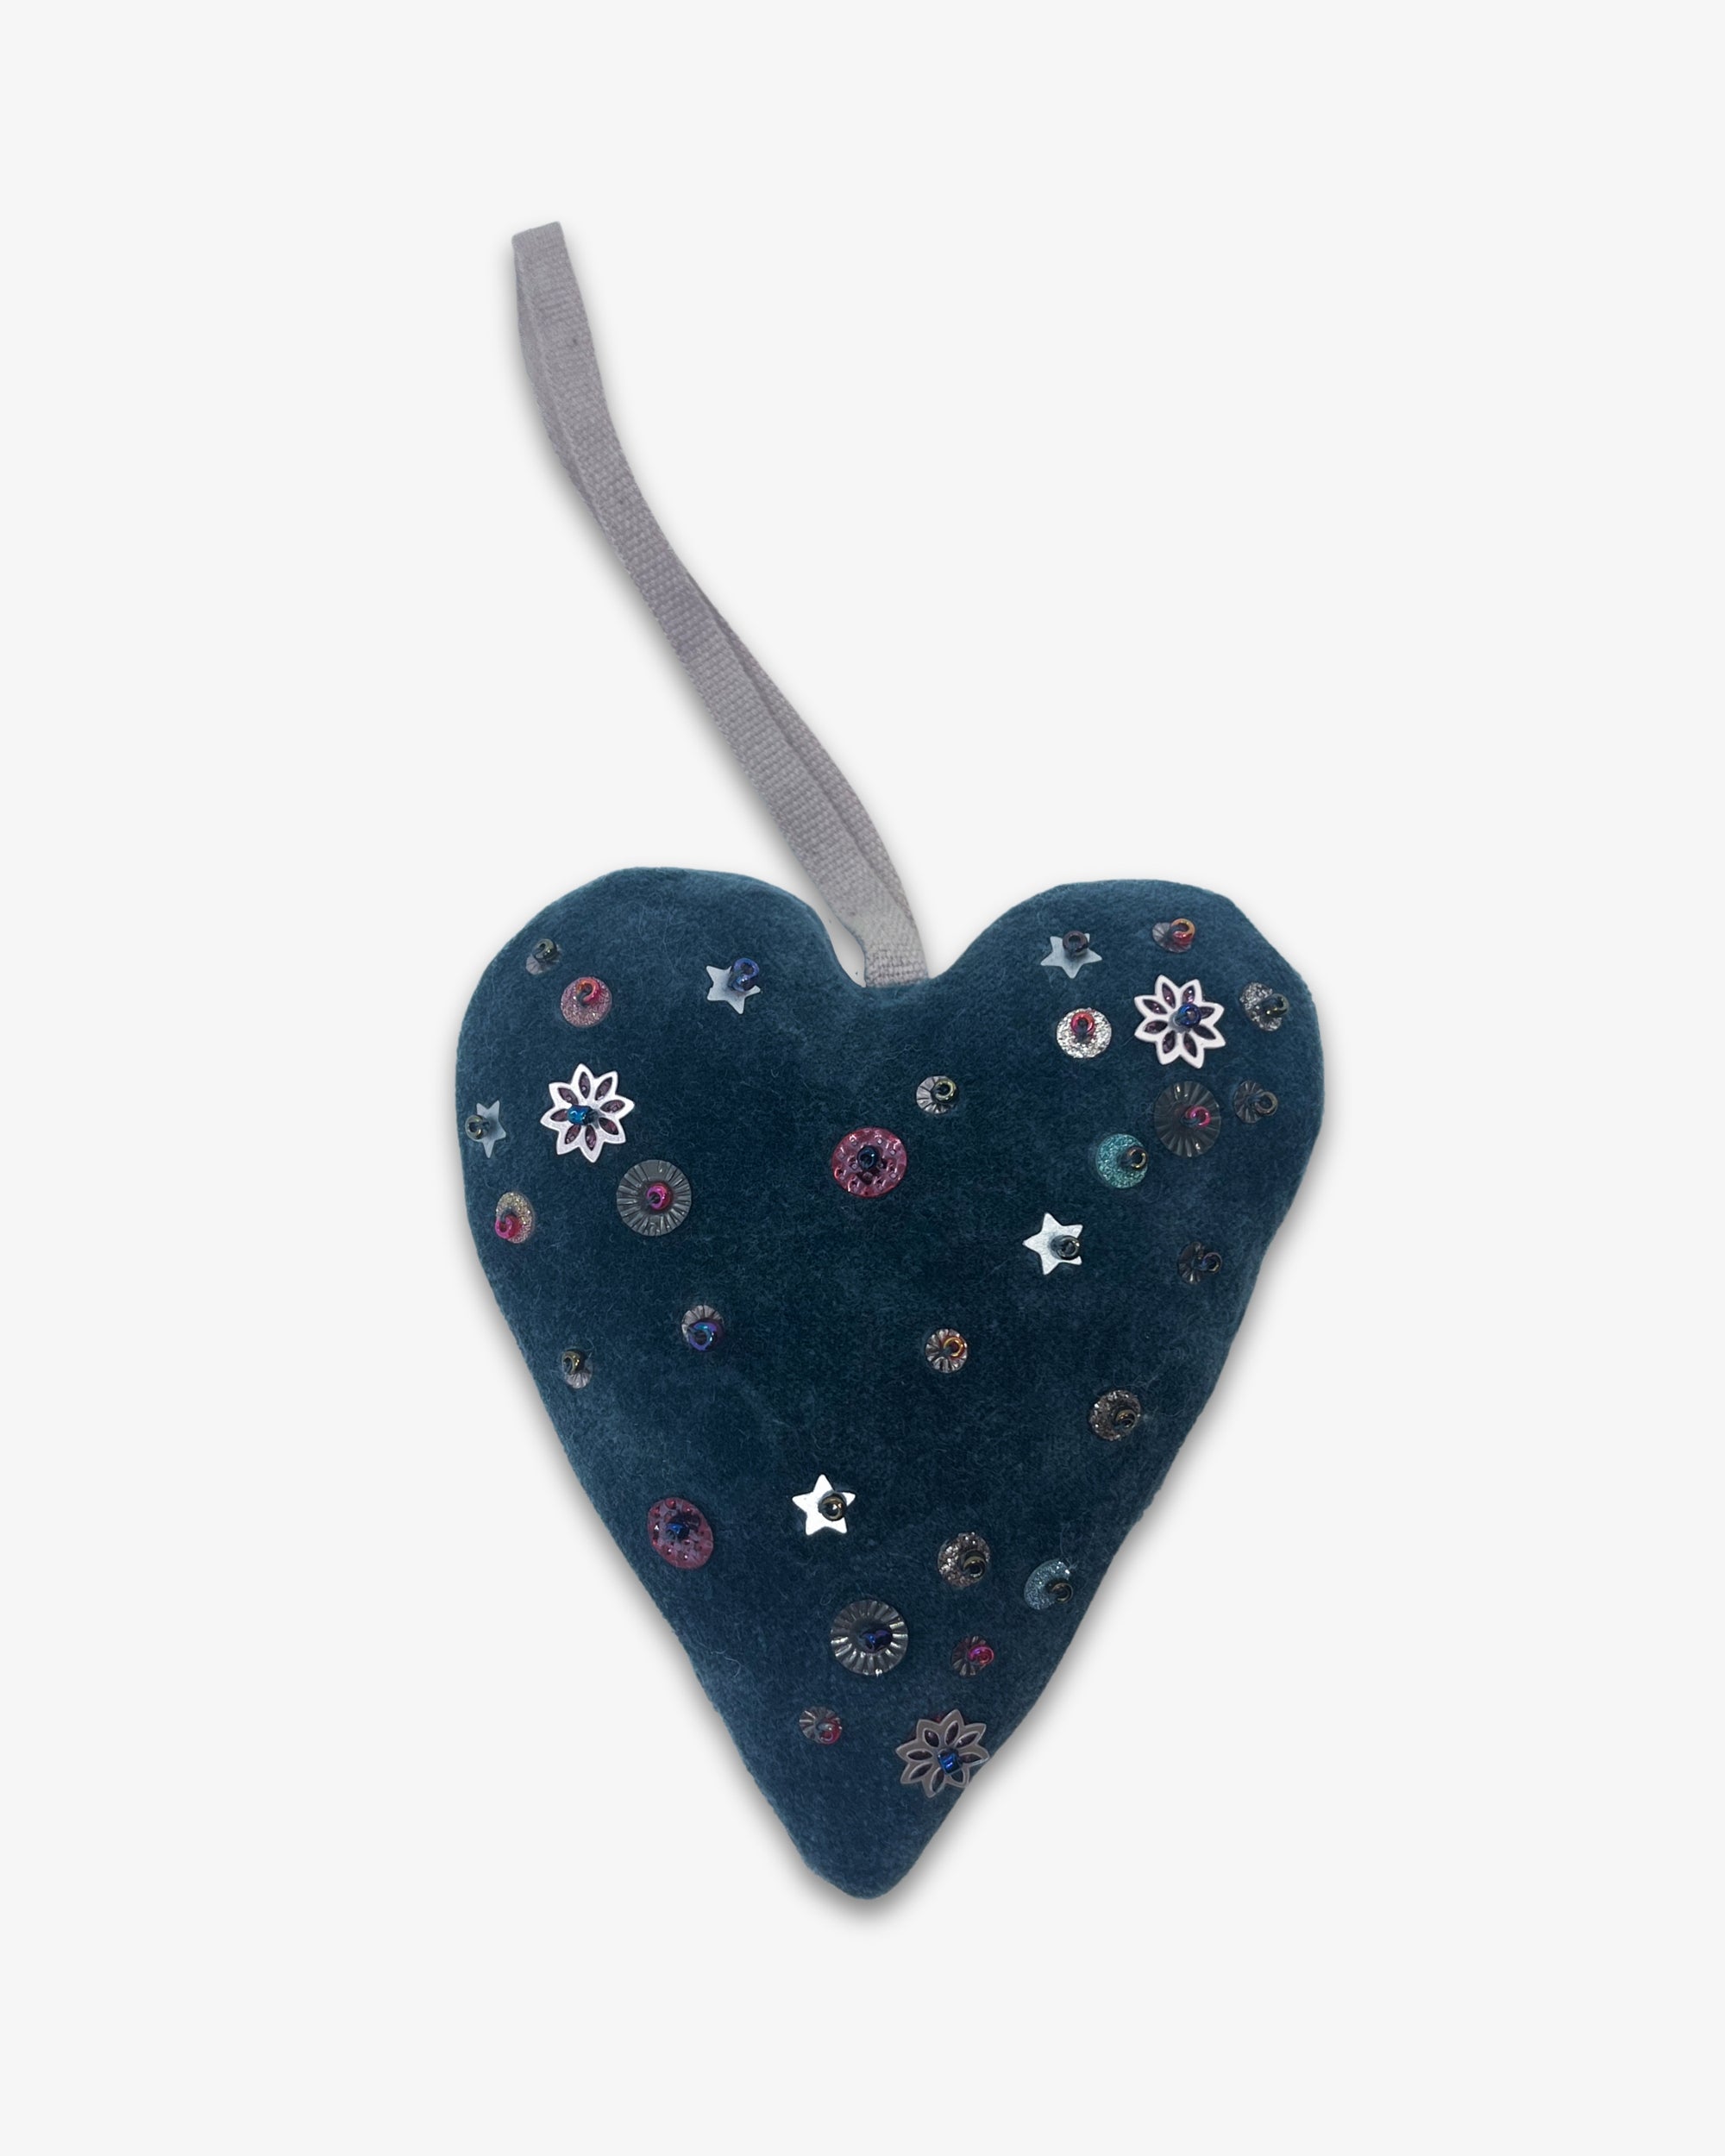 Velvet Confetti Heart Ornament by Skippy Cotton